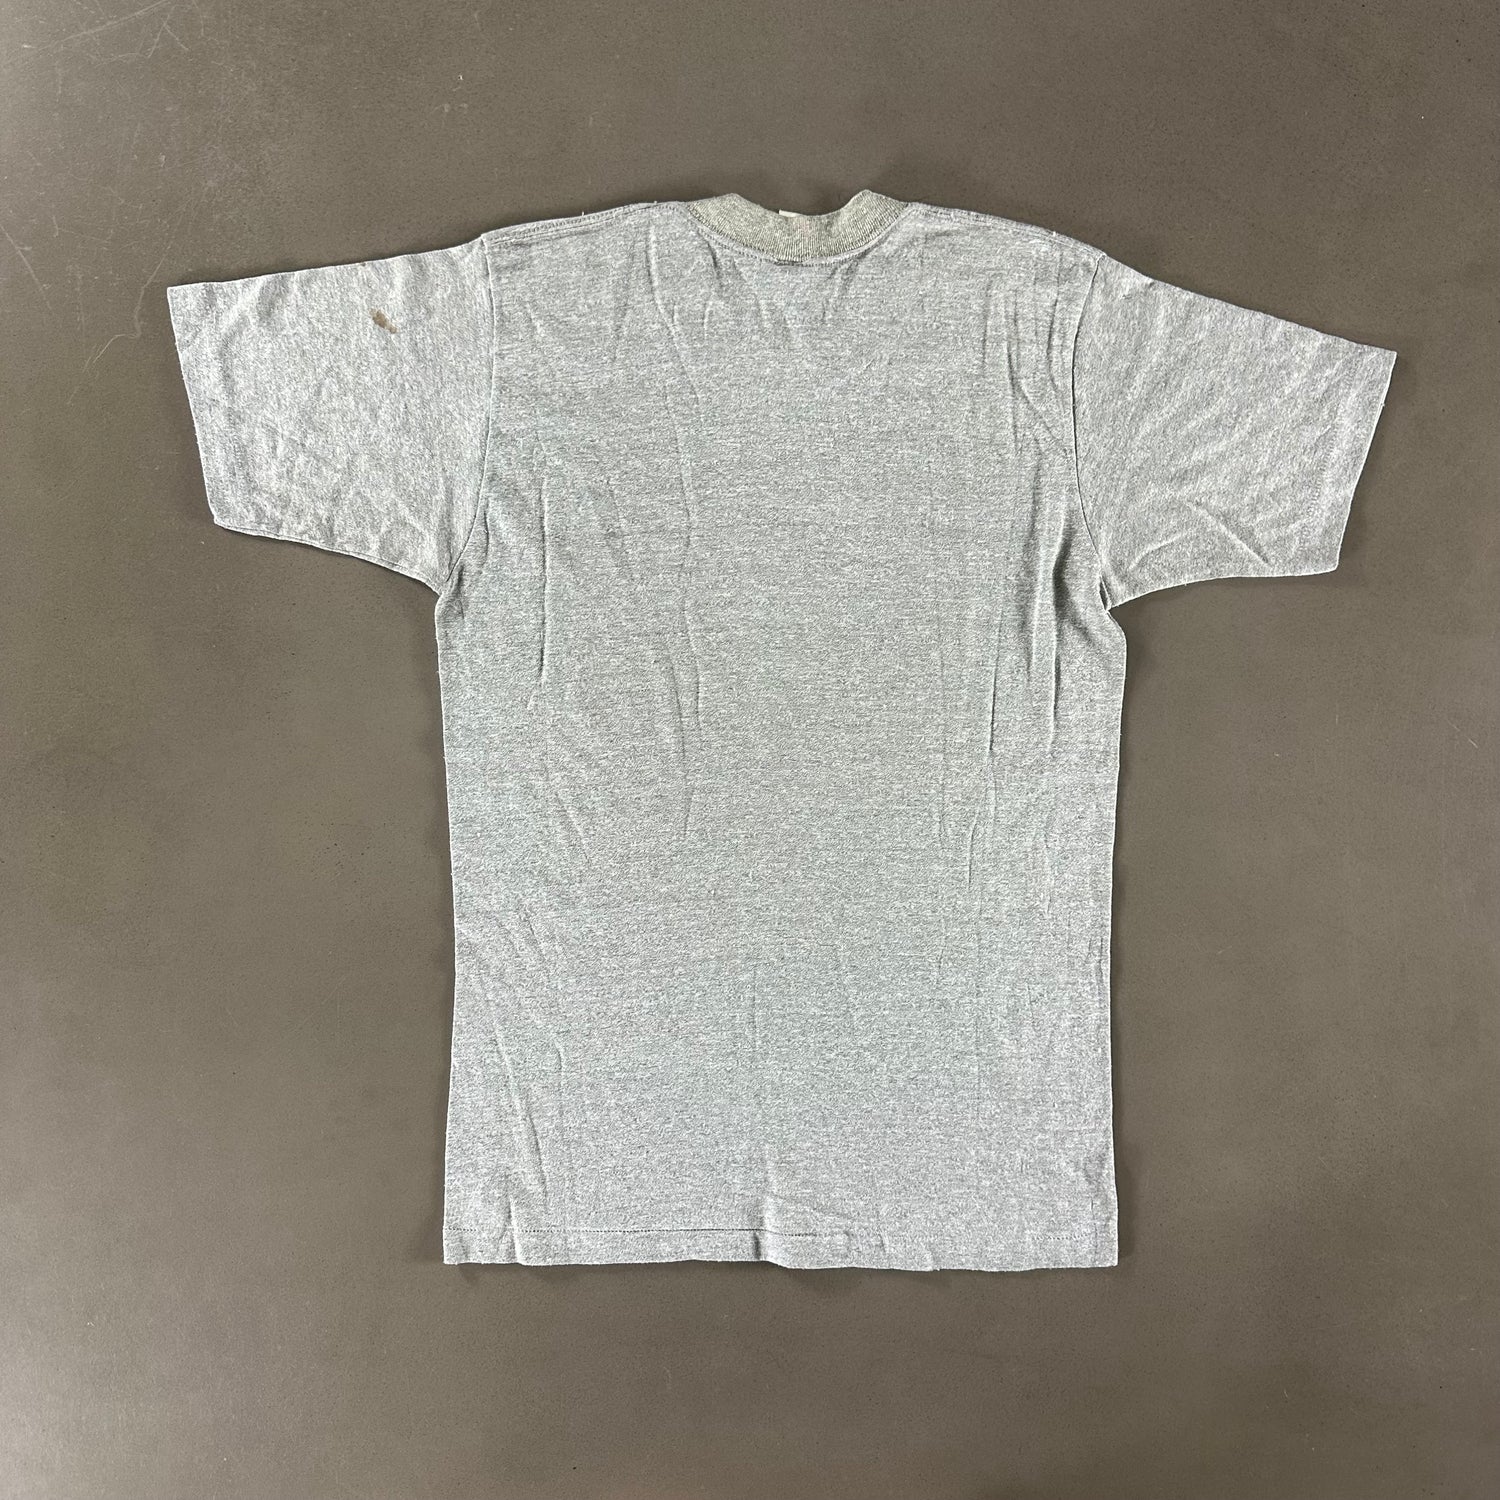 Vintage 1980s New Jersey Nets T-shirt size Medium